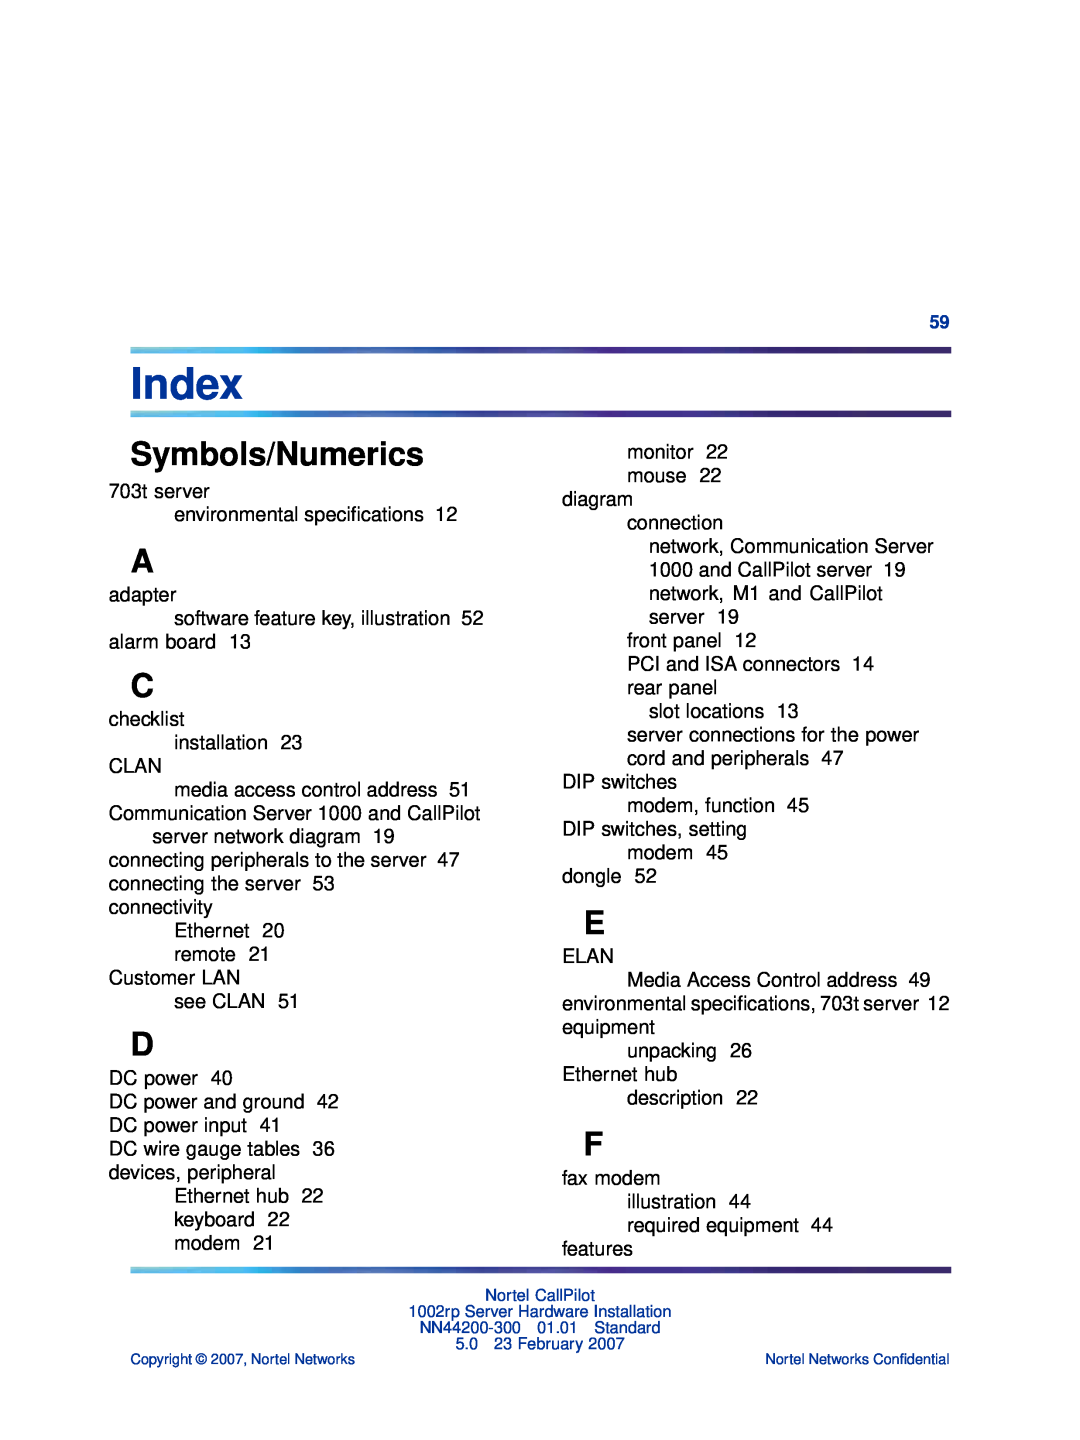 Nortel Networks NN44200-300 manual Index, Symbols/Numerics 